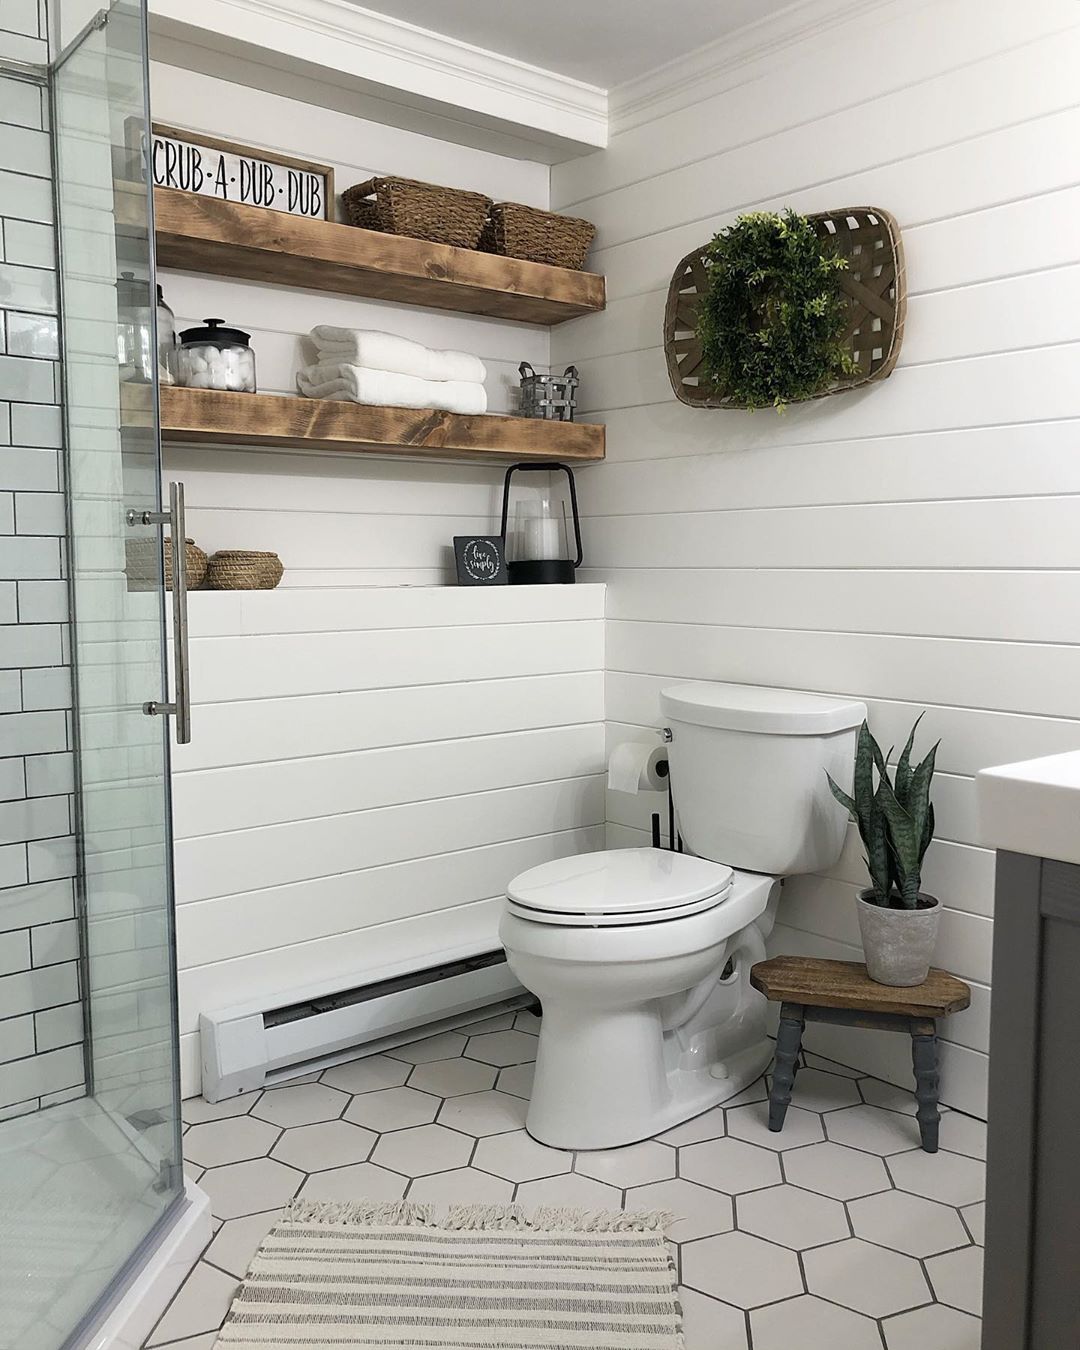 Bathroom with Towels, Baskets, and Jars on Wall Storage. Photo by Instagram user @vintagewhiteoak